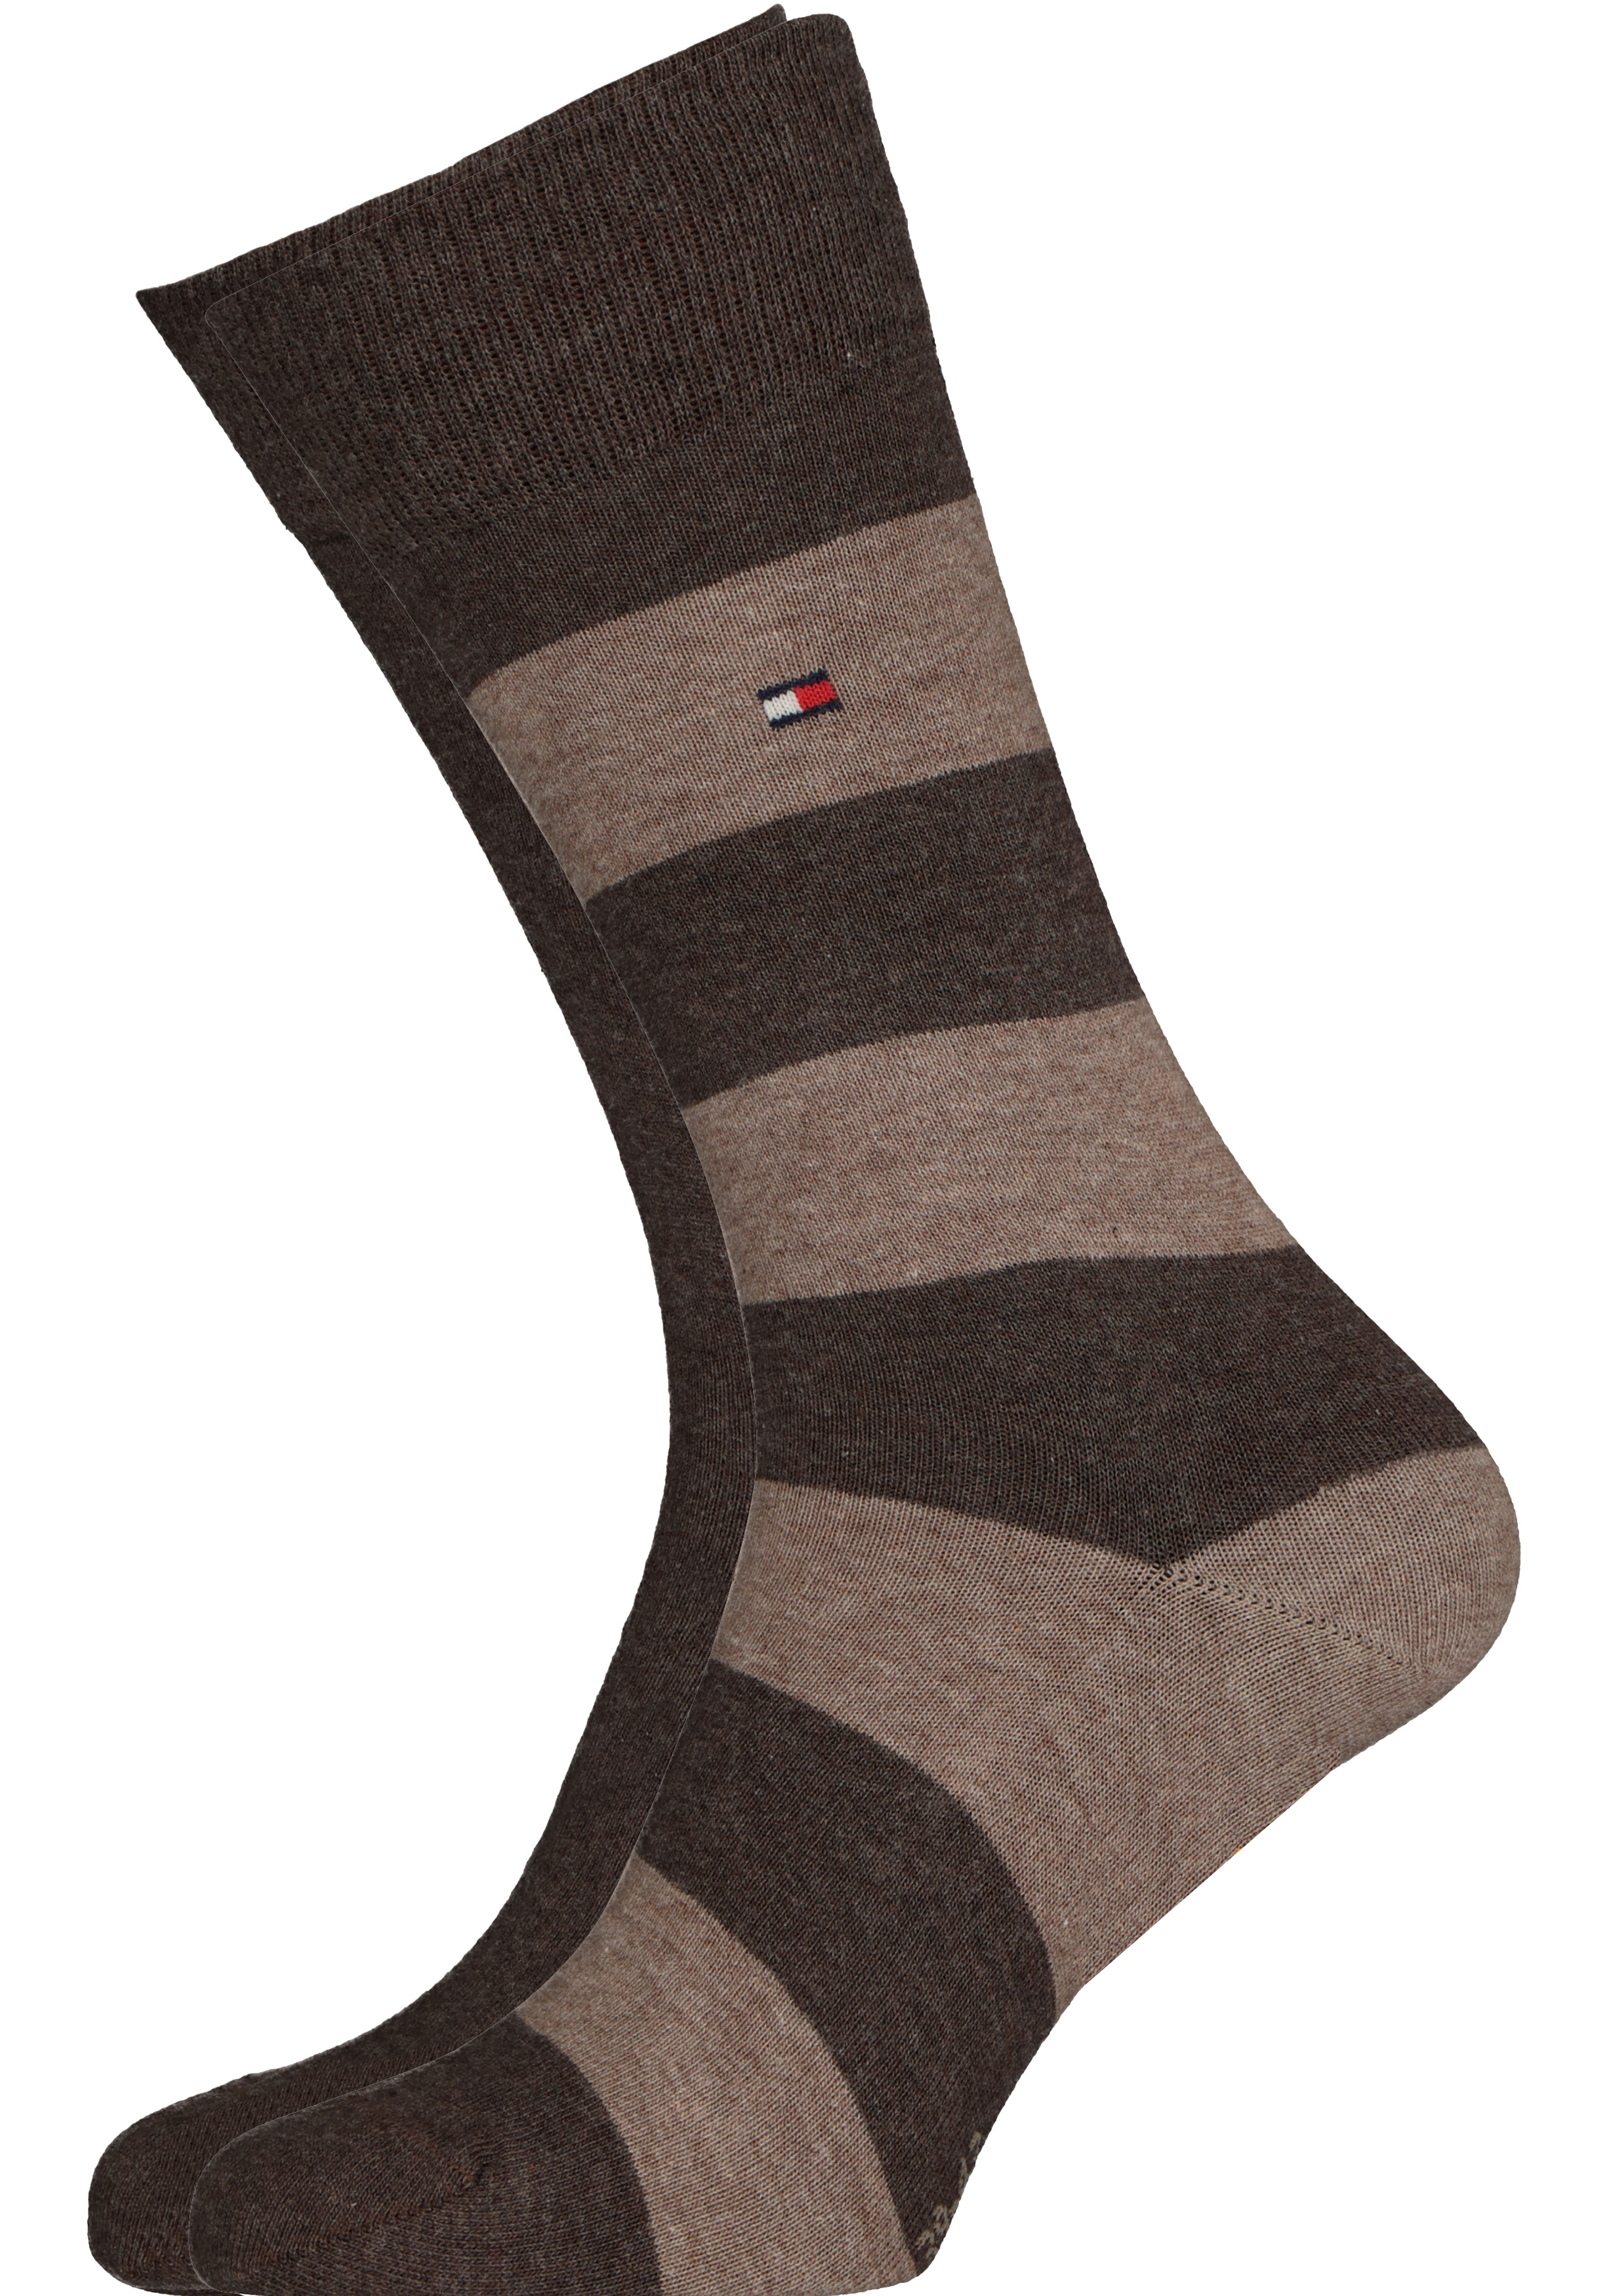 Tommy Hilfiger Rugby Stripe Socks (2-pack), herensokken katoen gestreept en uni, bruin